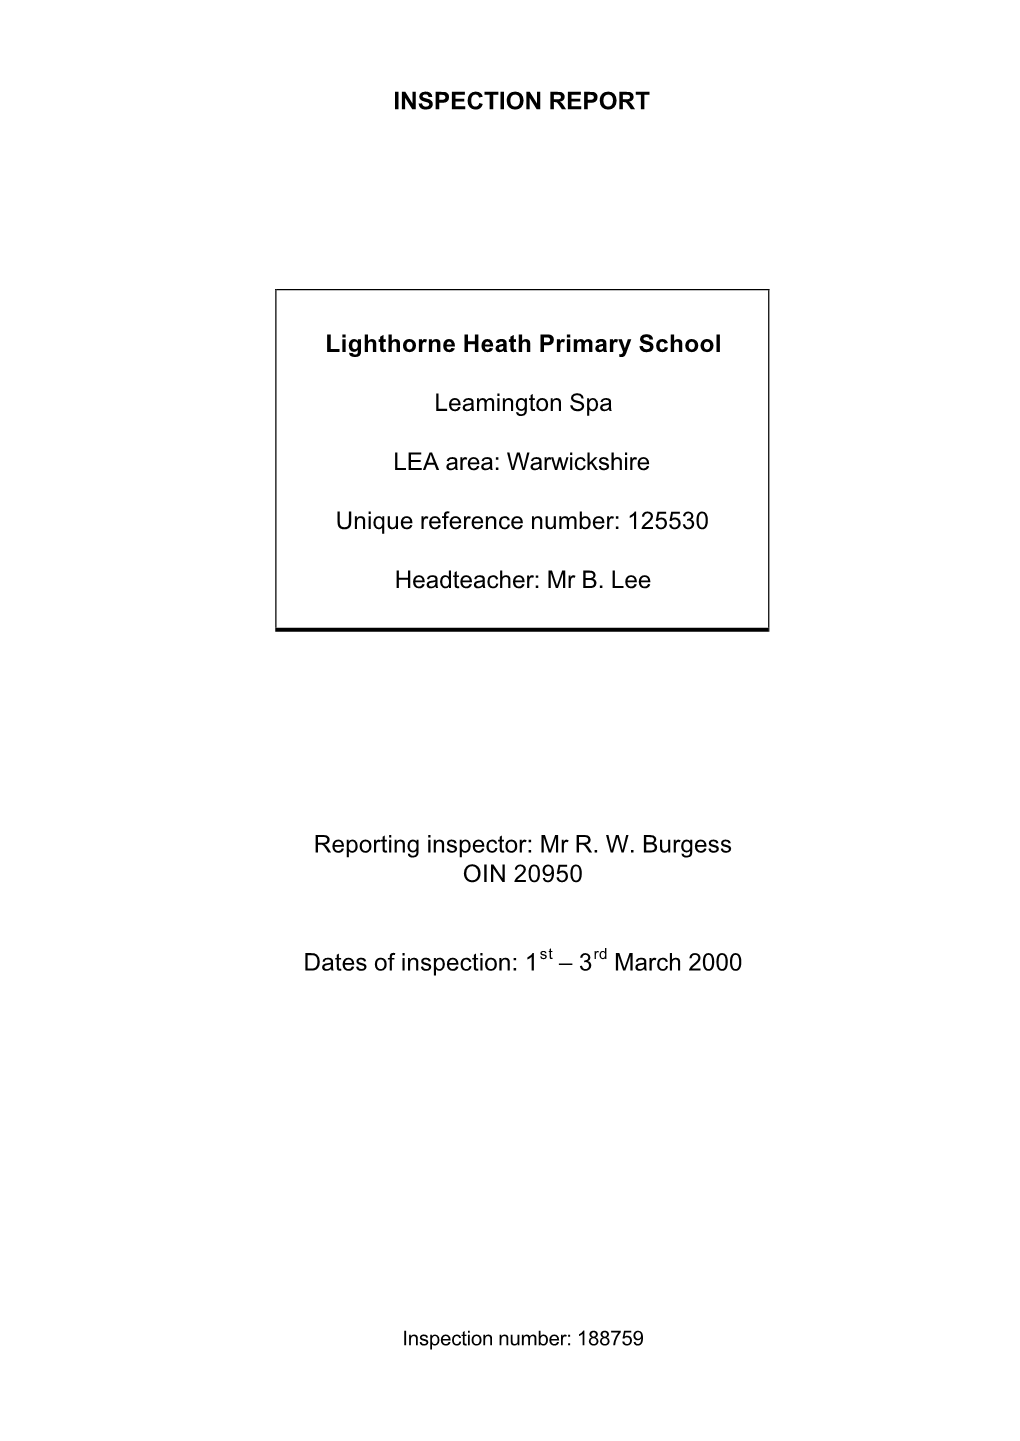 INSPECTION REPORT Lighthorne Heath Primary School Leamington